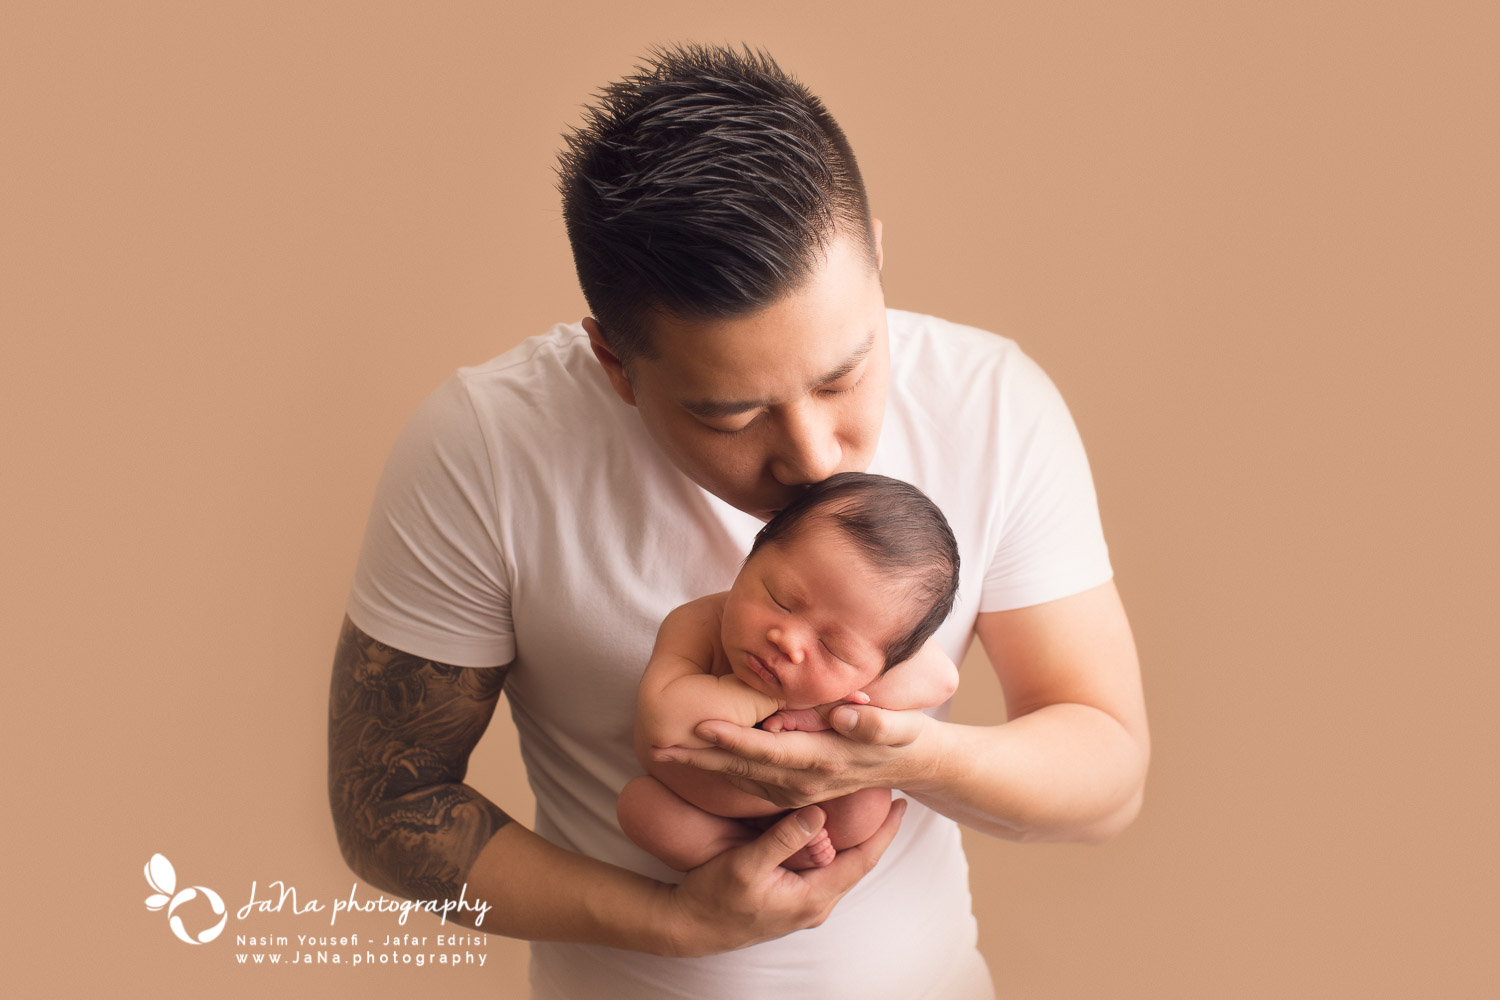 Newborn photography Vancouver - dad